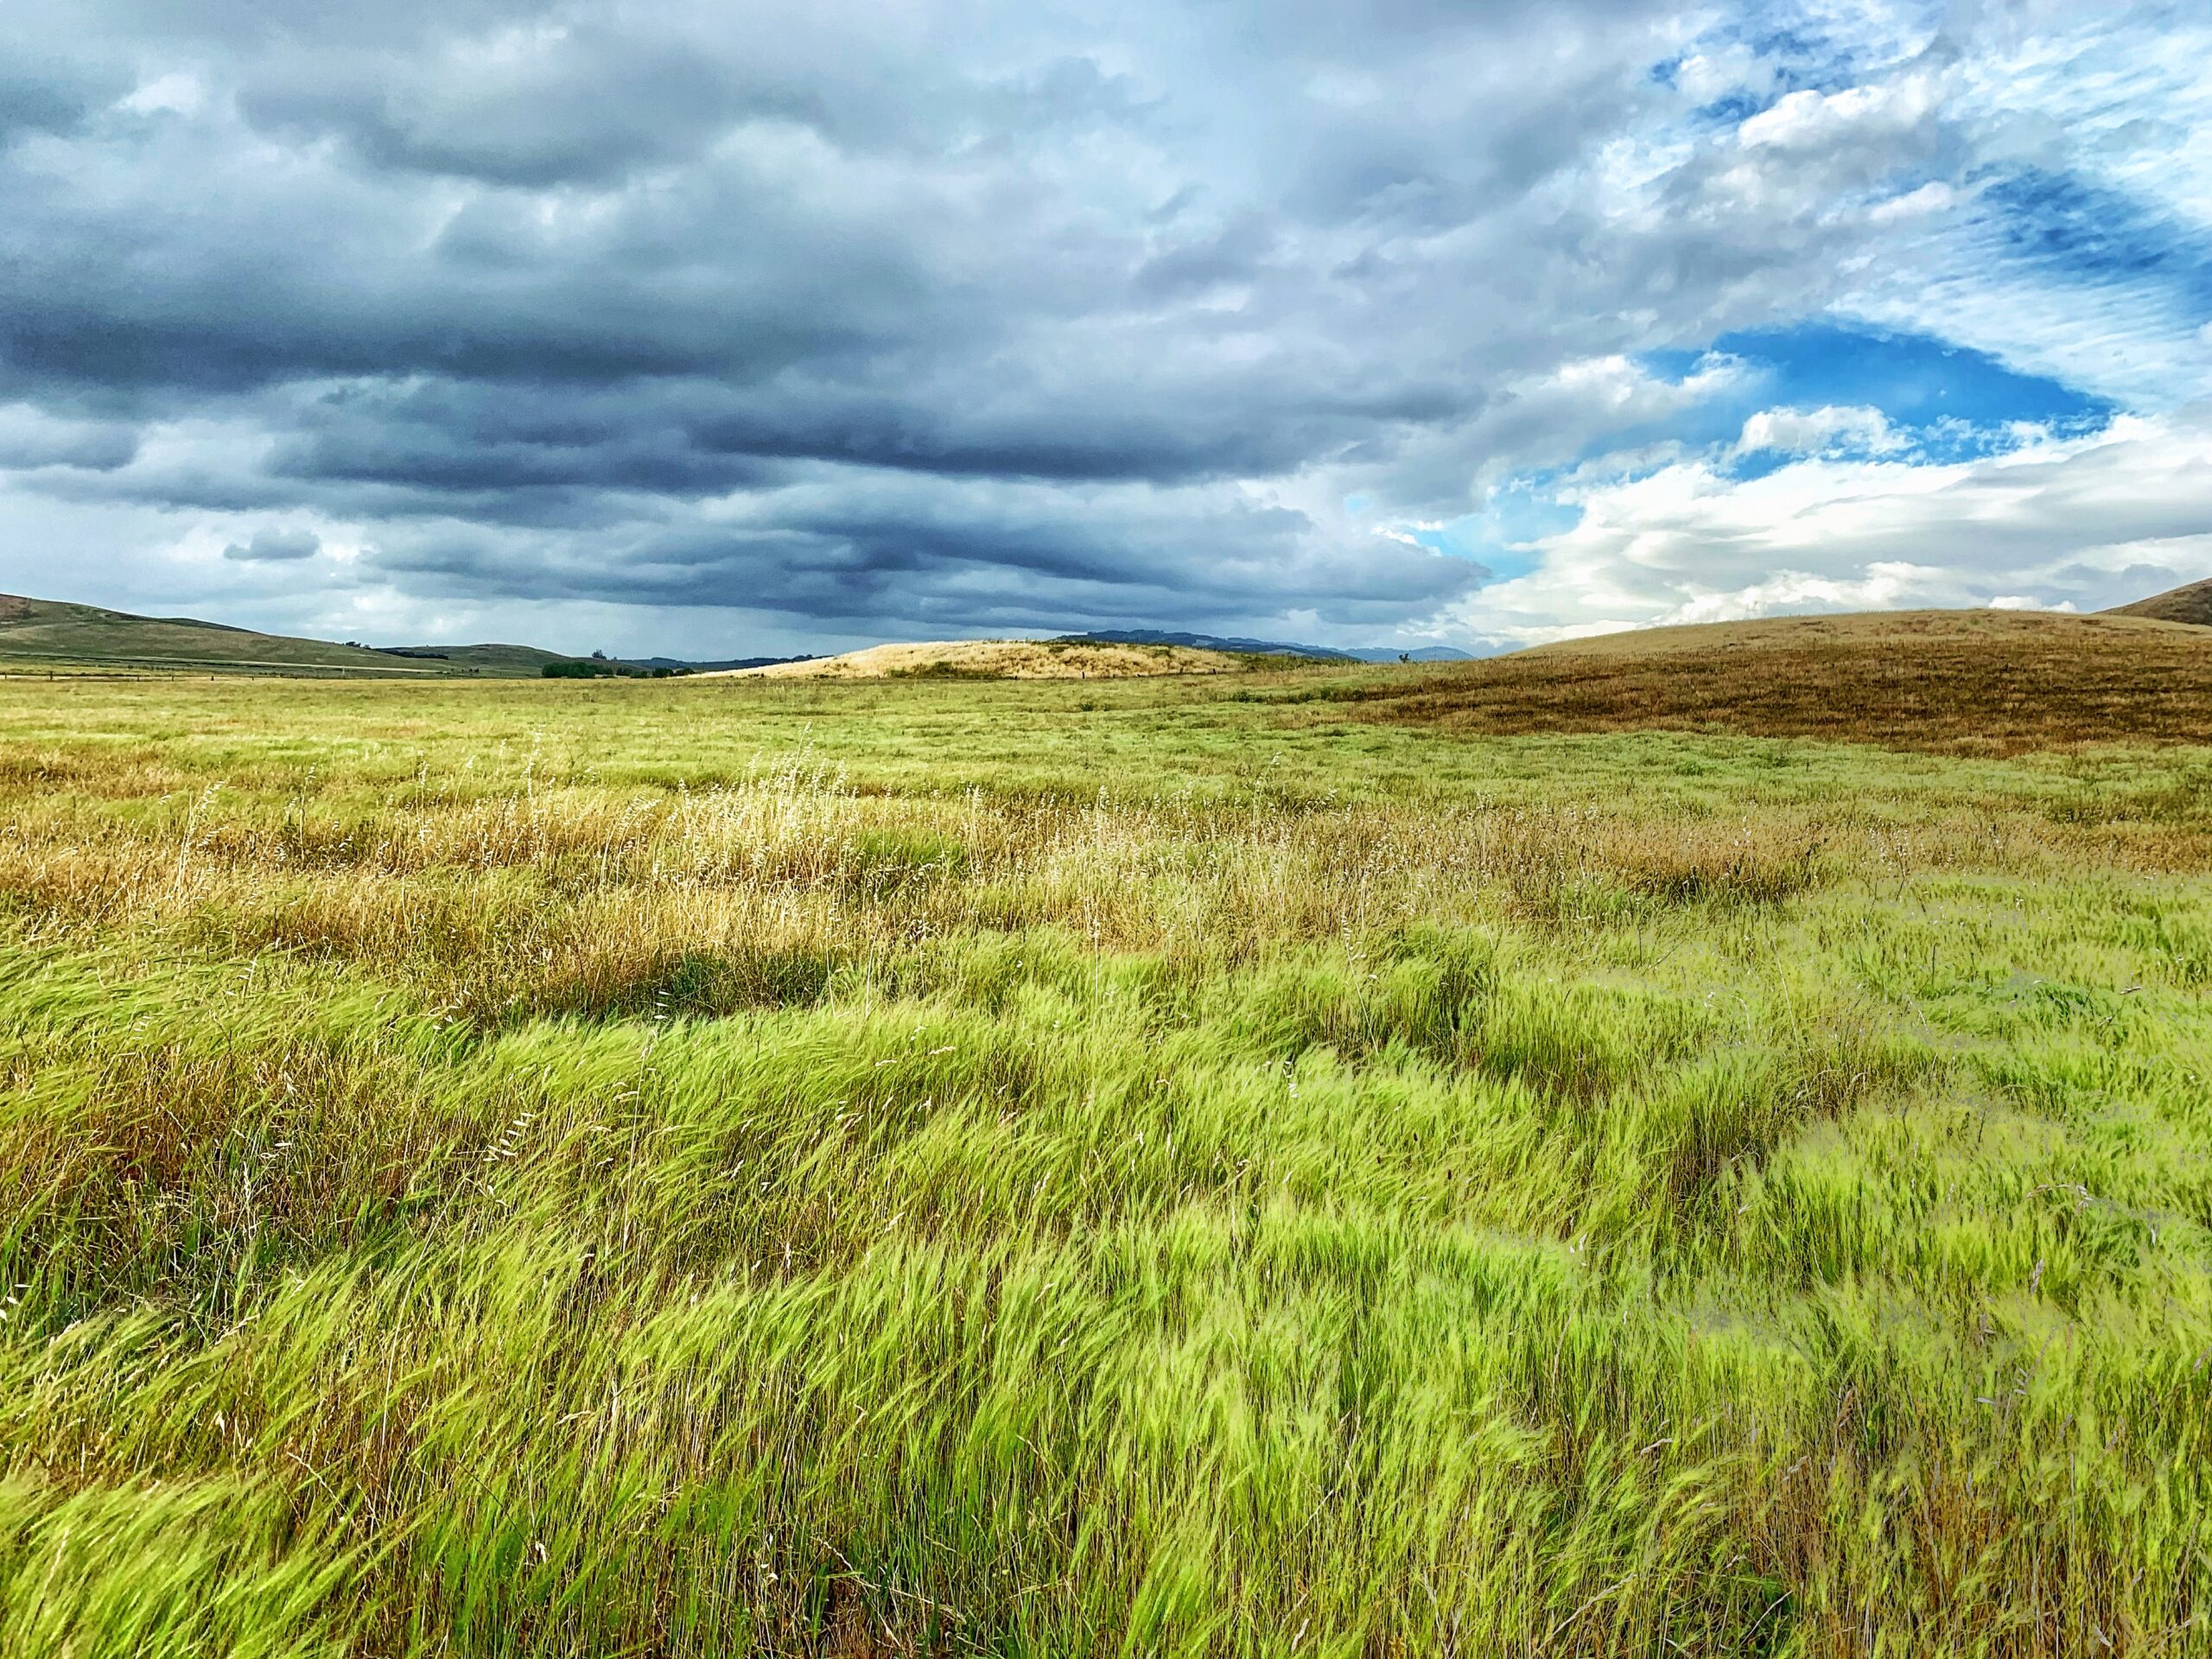 A grassy field under a cloudy sky.